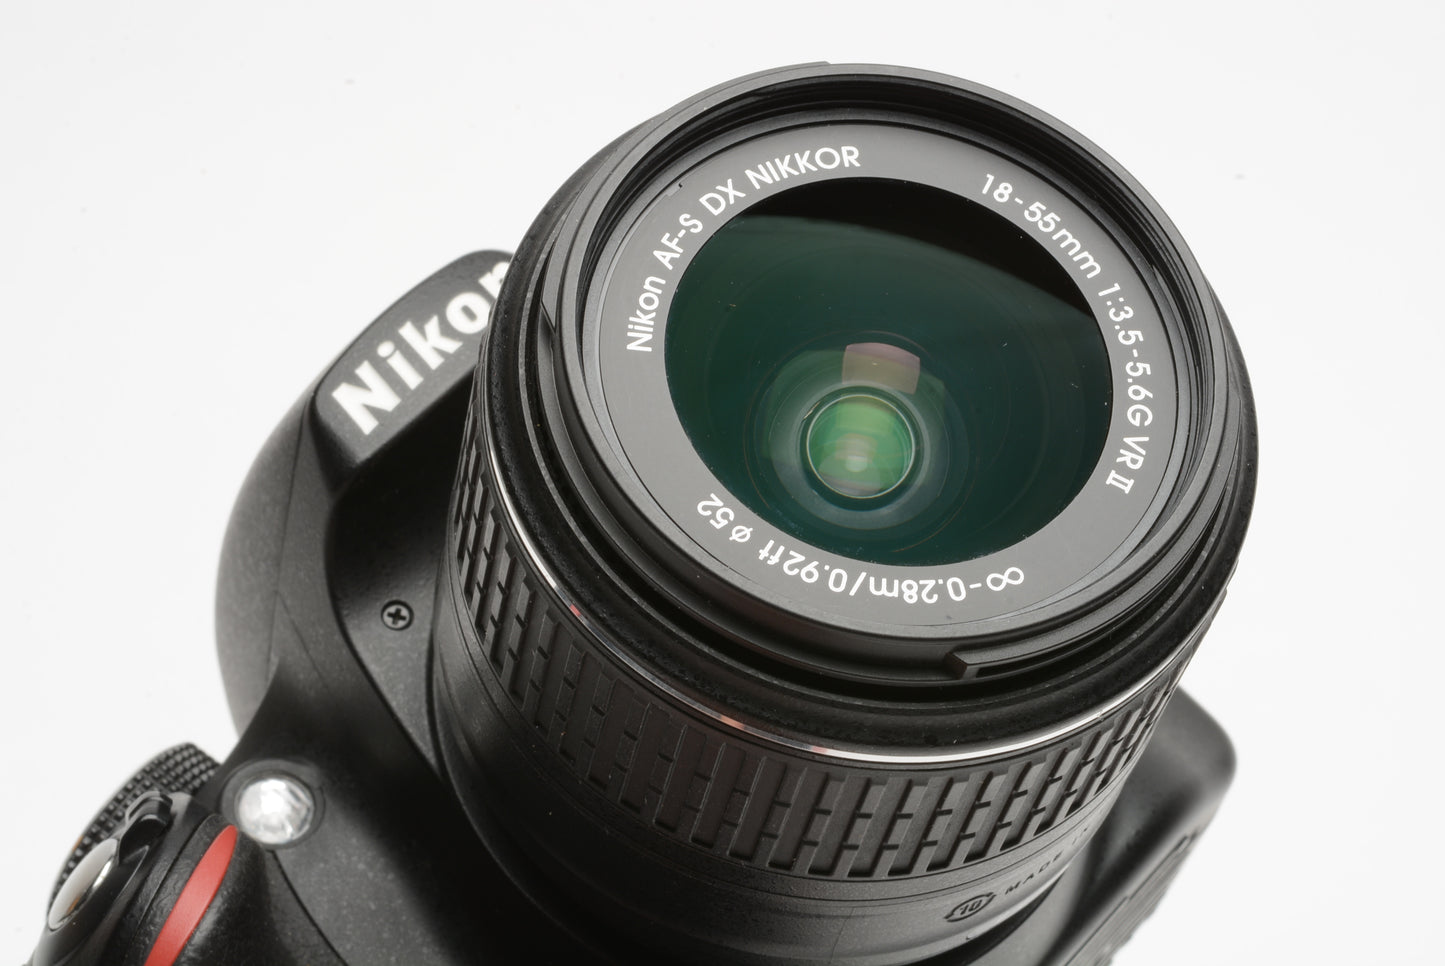 Nikon D3200 DSLR w/18-55mm f3.5-5.6G II VR zoom lens, batt+charger+strap 16K Acts